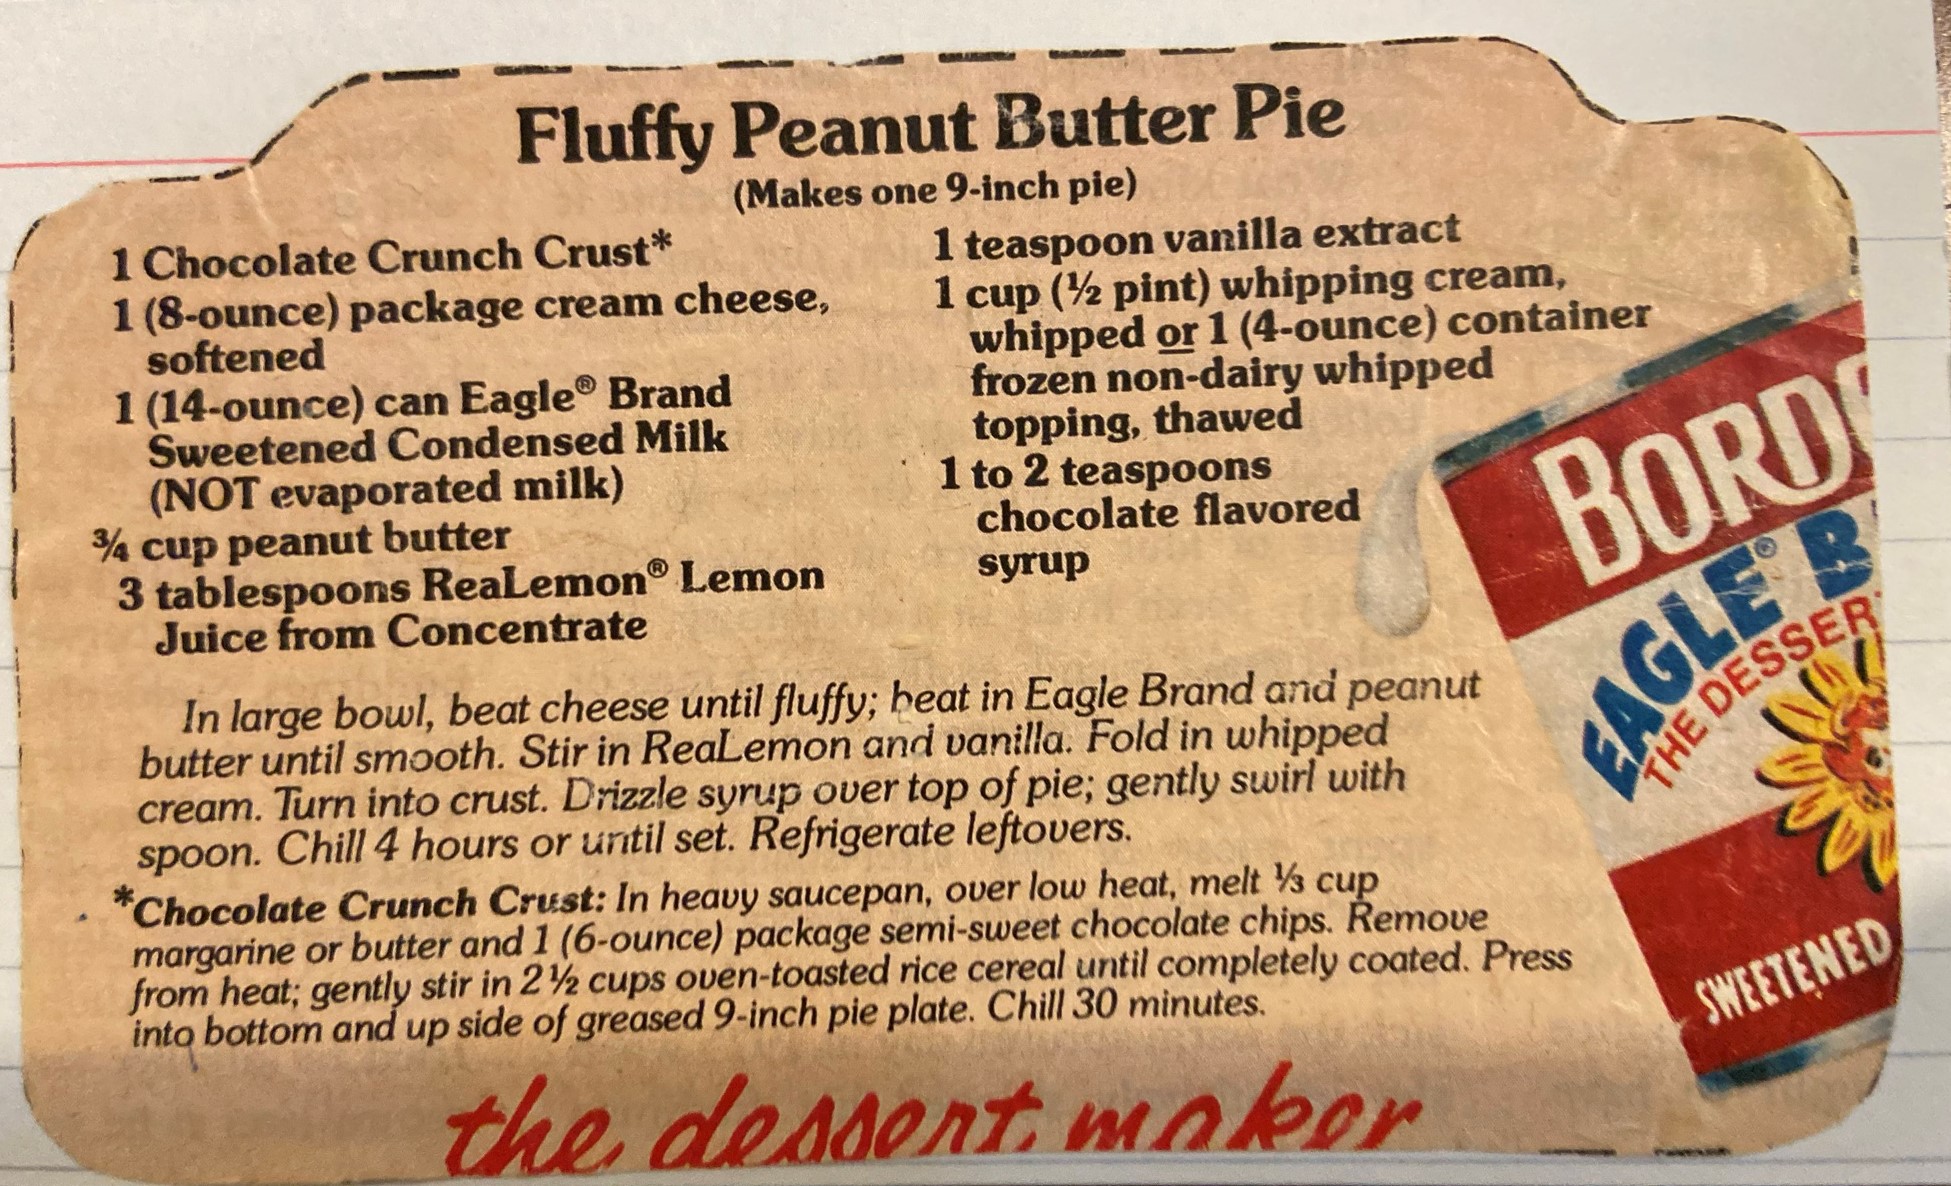 Fluffy Peanut Butter Pie